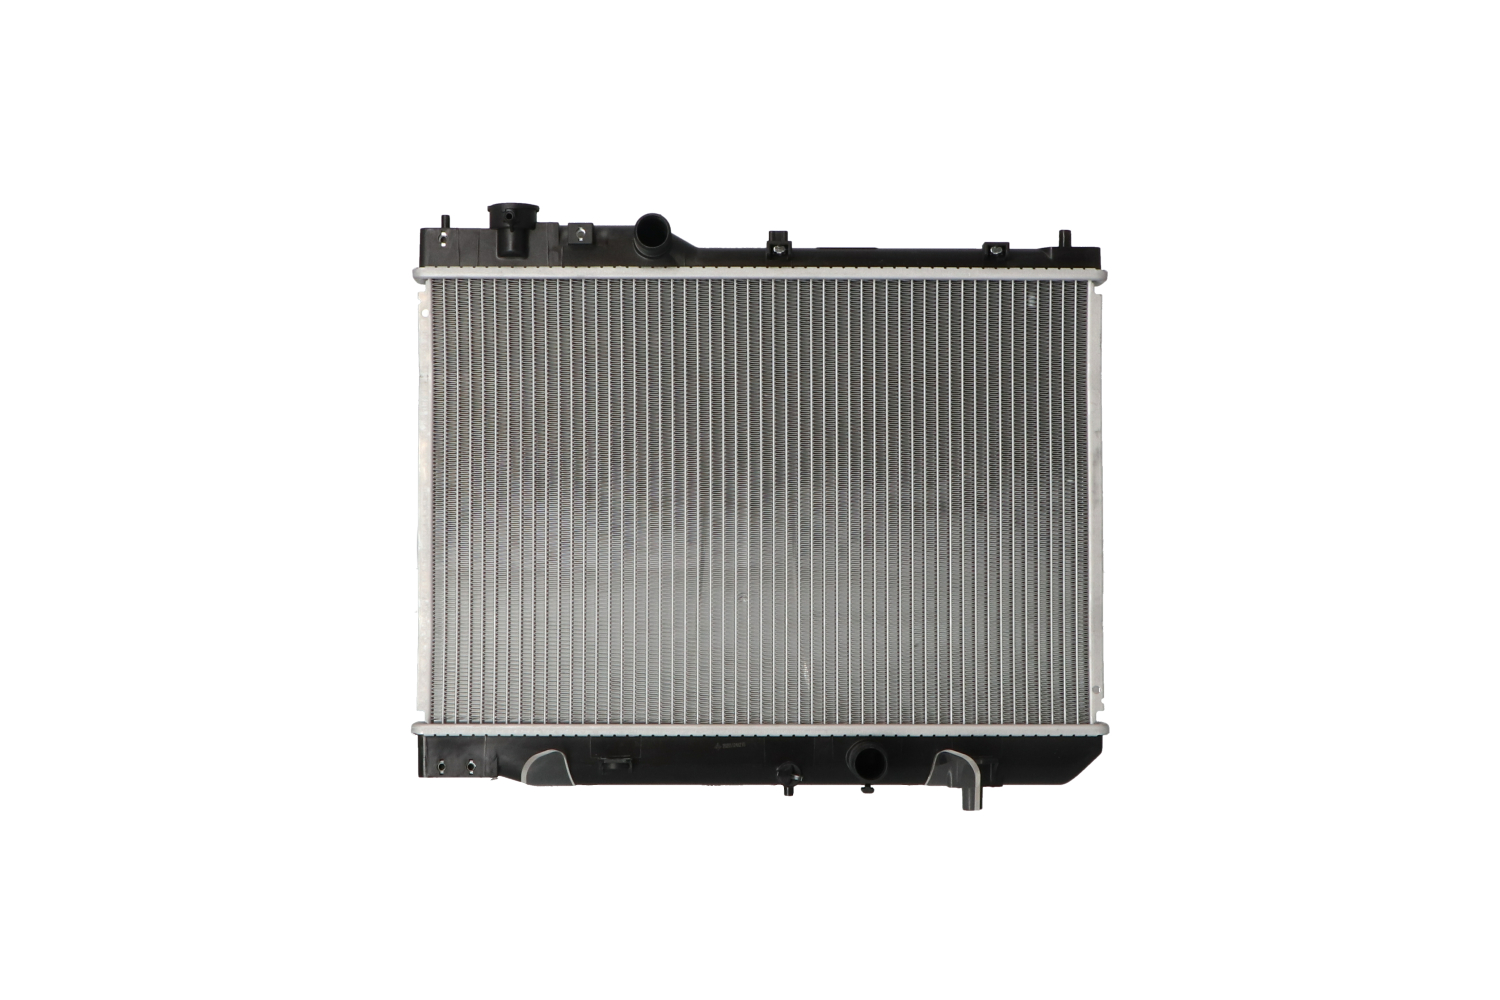 NRF Aluminium, 518 x 348 x 26 mm, with cap, Brazed cooling fins Radiator 59325 buy